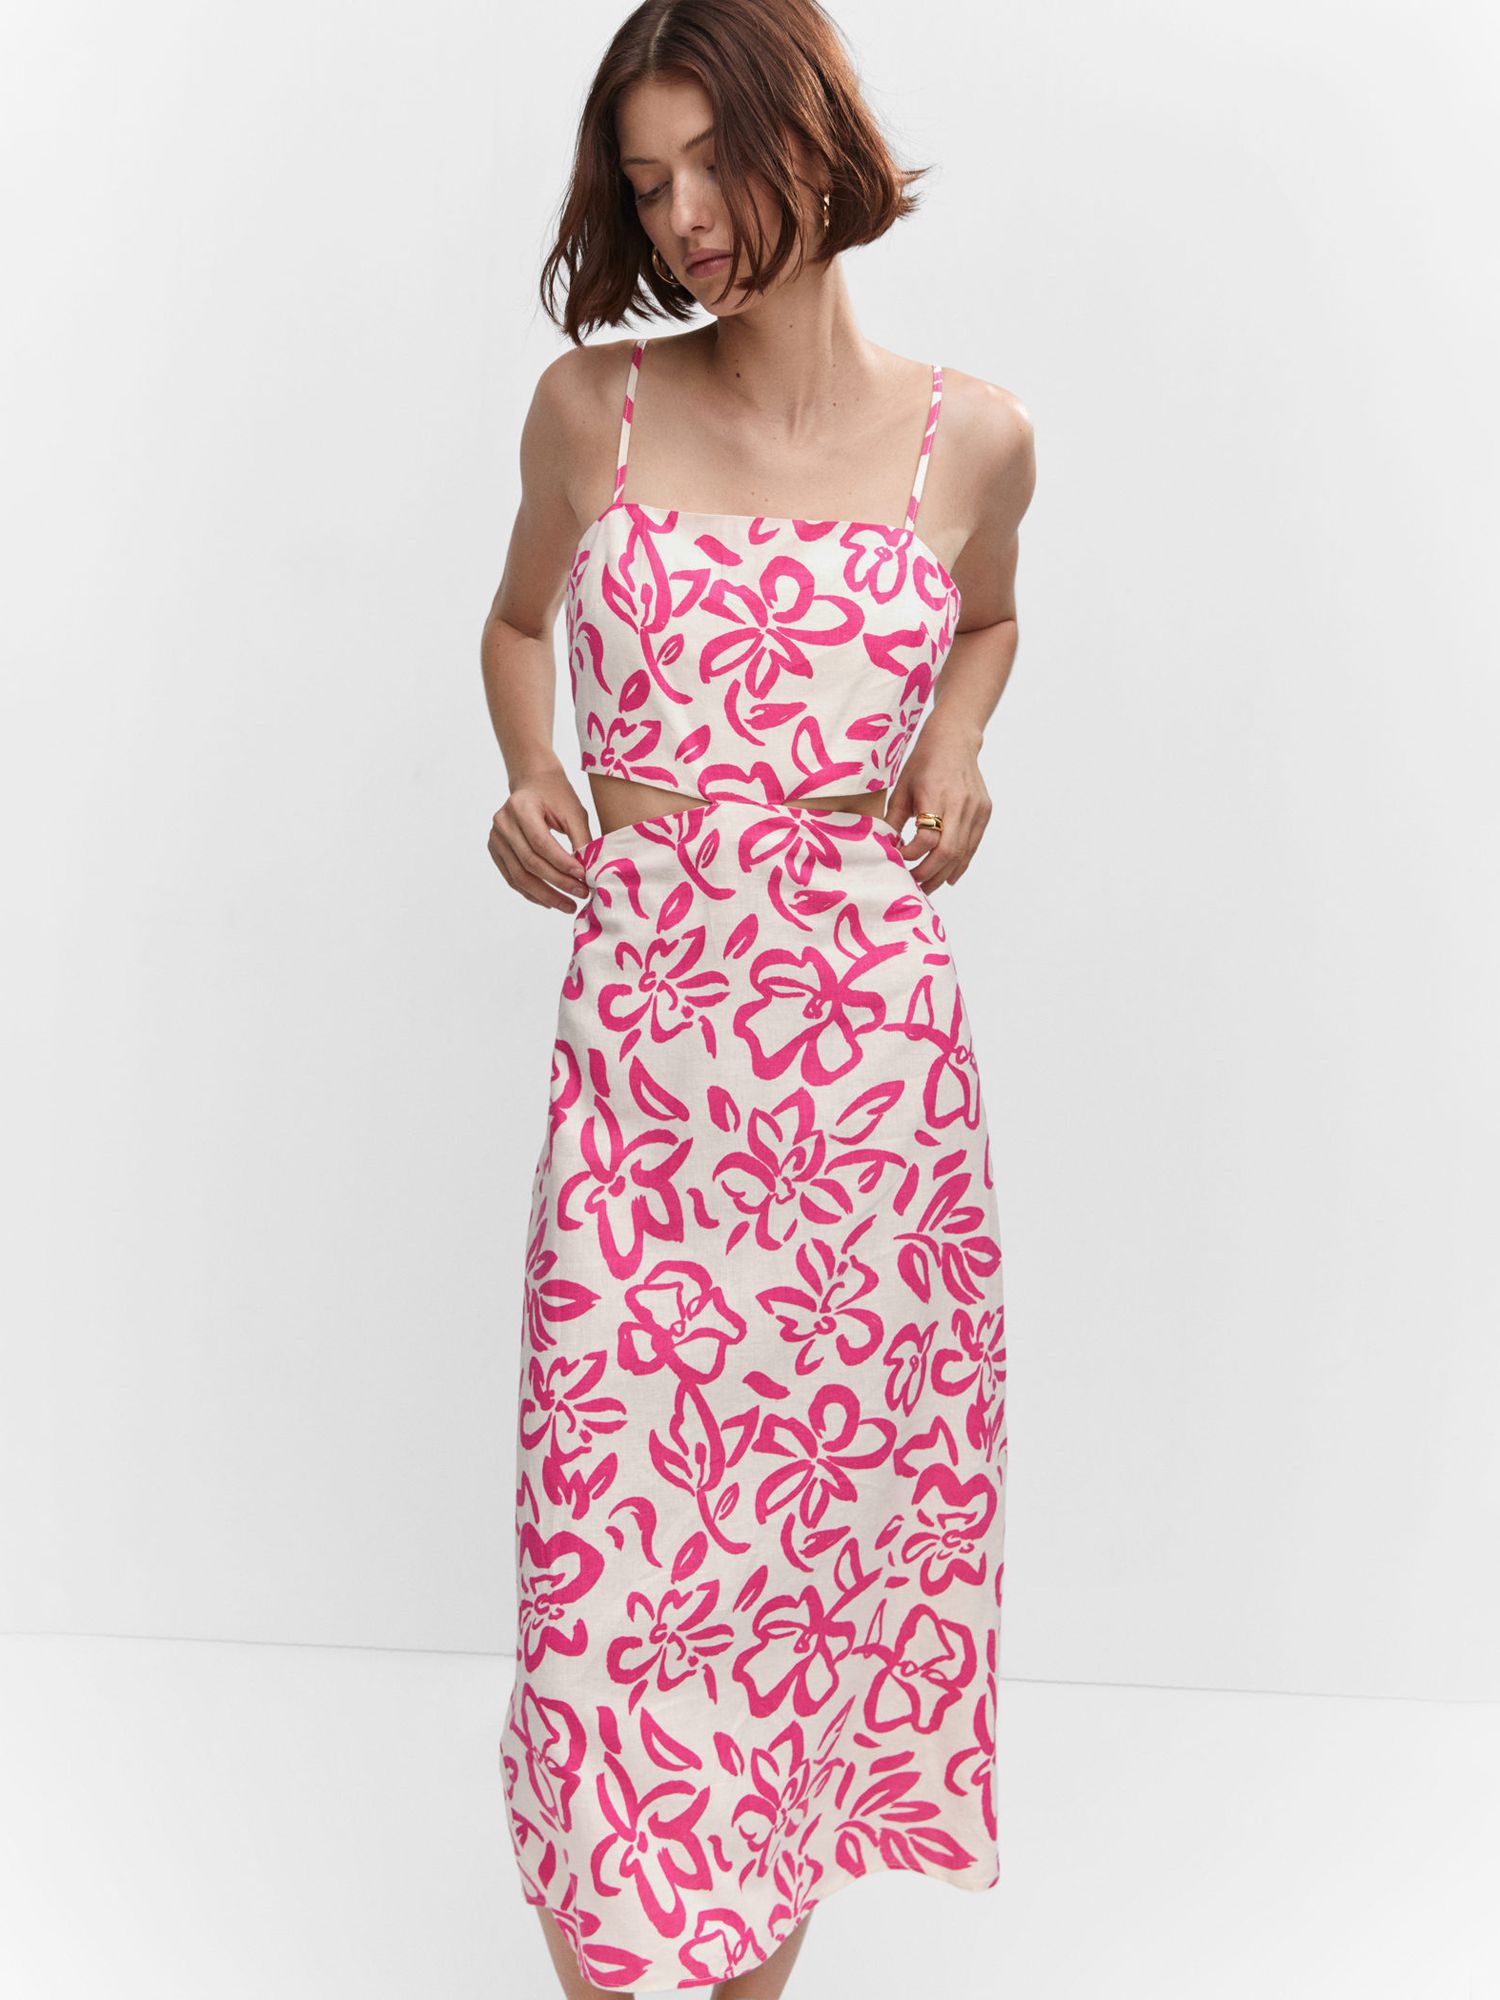 Mango Olimpia Floral Cut Out Linen Blend Midi Dress, Bright Pink, 4